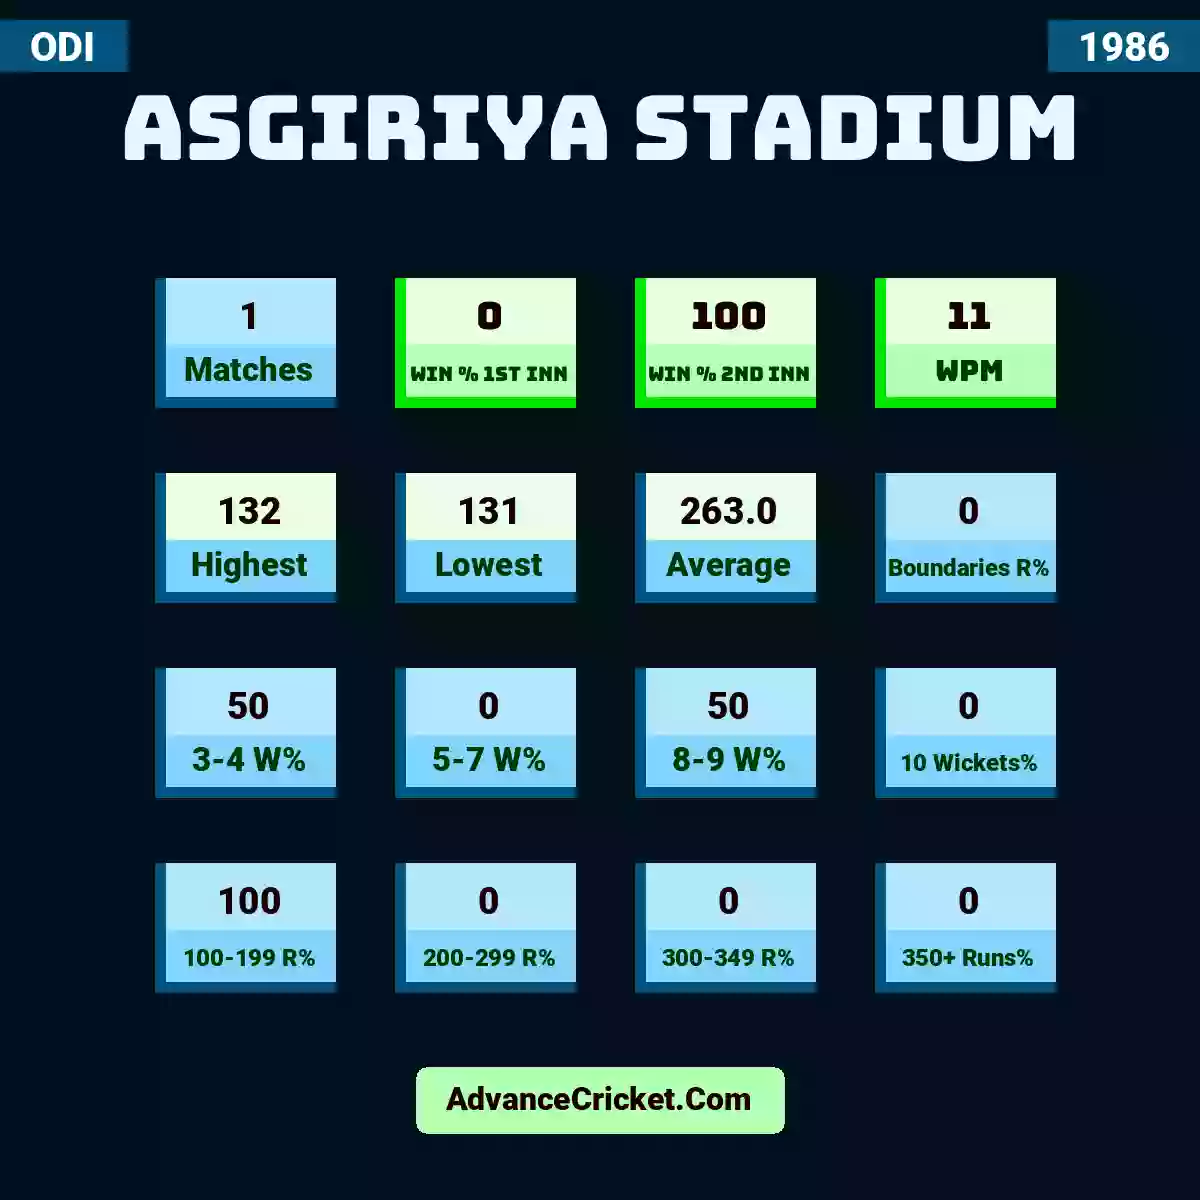 Image showing Asgiriya Stadium with Matches: 1, Win % 1st Inn: 0, Win % 2nd Inn: 100, WPM: 11, Highest: 132, Lowest: 131, Average: 263.0, Boundaries R%: 0, 3-4 W%: 50, 5-7 W%: 0, 8-9 W%: 50, 10 Wickets%: 0, 100-199 R%: 100, 200-299 R%: 0, 300-349 R%: 0, 350+ Runs%: 0.